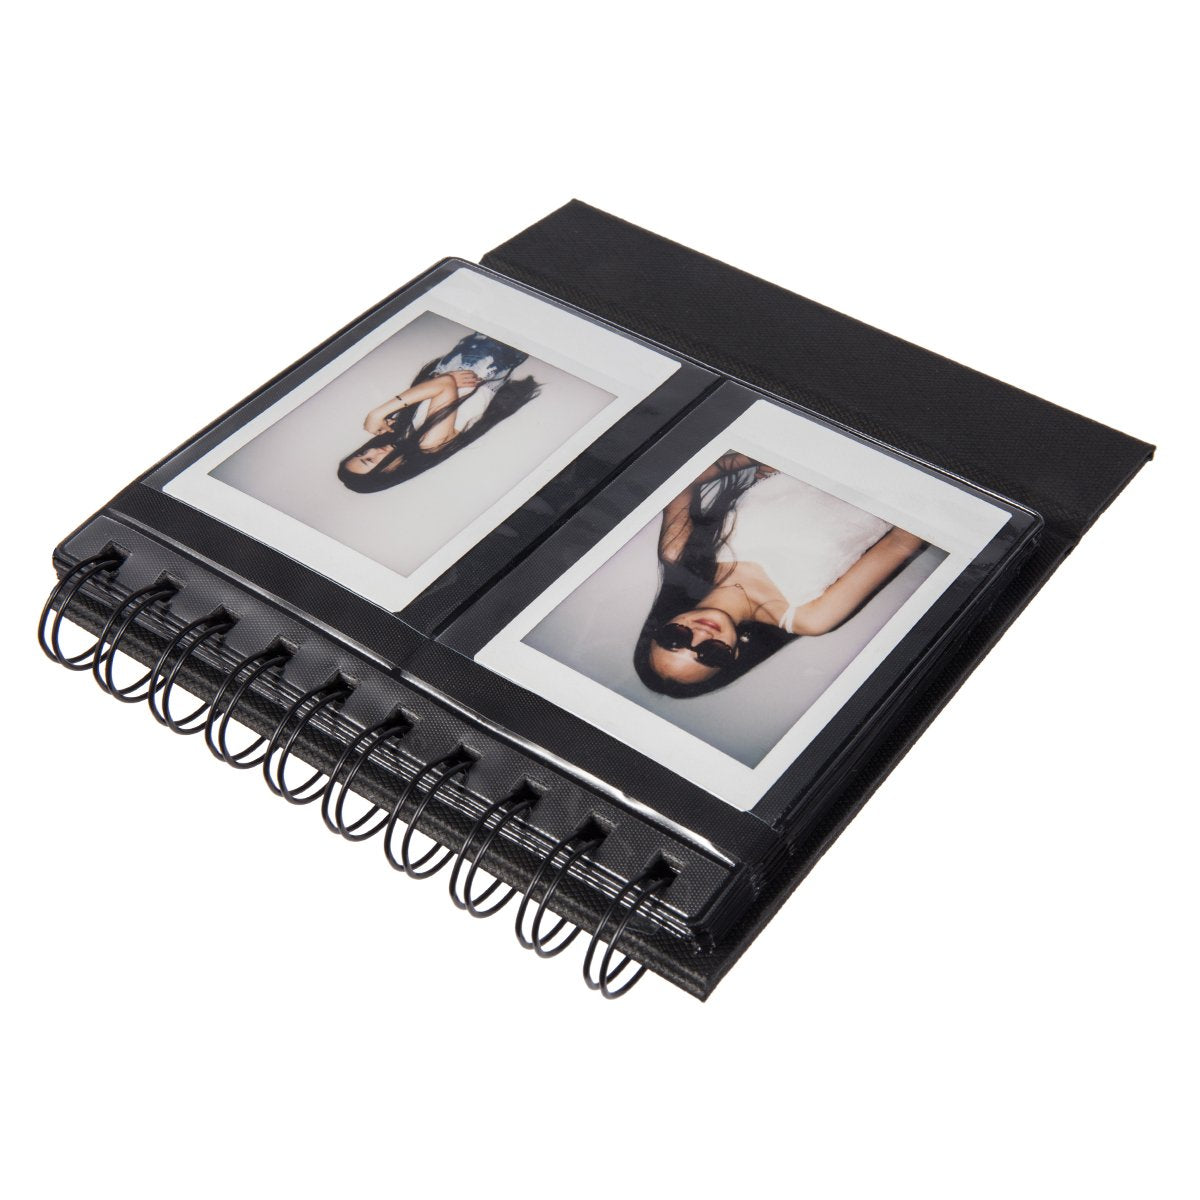 CAIUL 68 Pockets Desk Calendar Style Photo Album for Fujifilm Instax Mini 7s 8 8+ 9 25 26 50s 70 90 Films Black